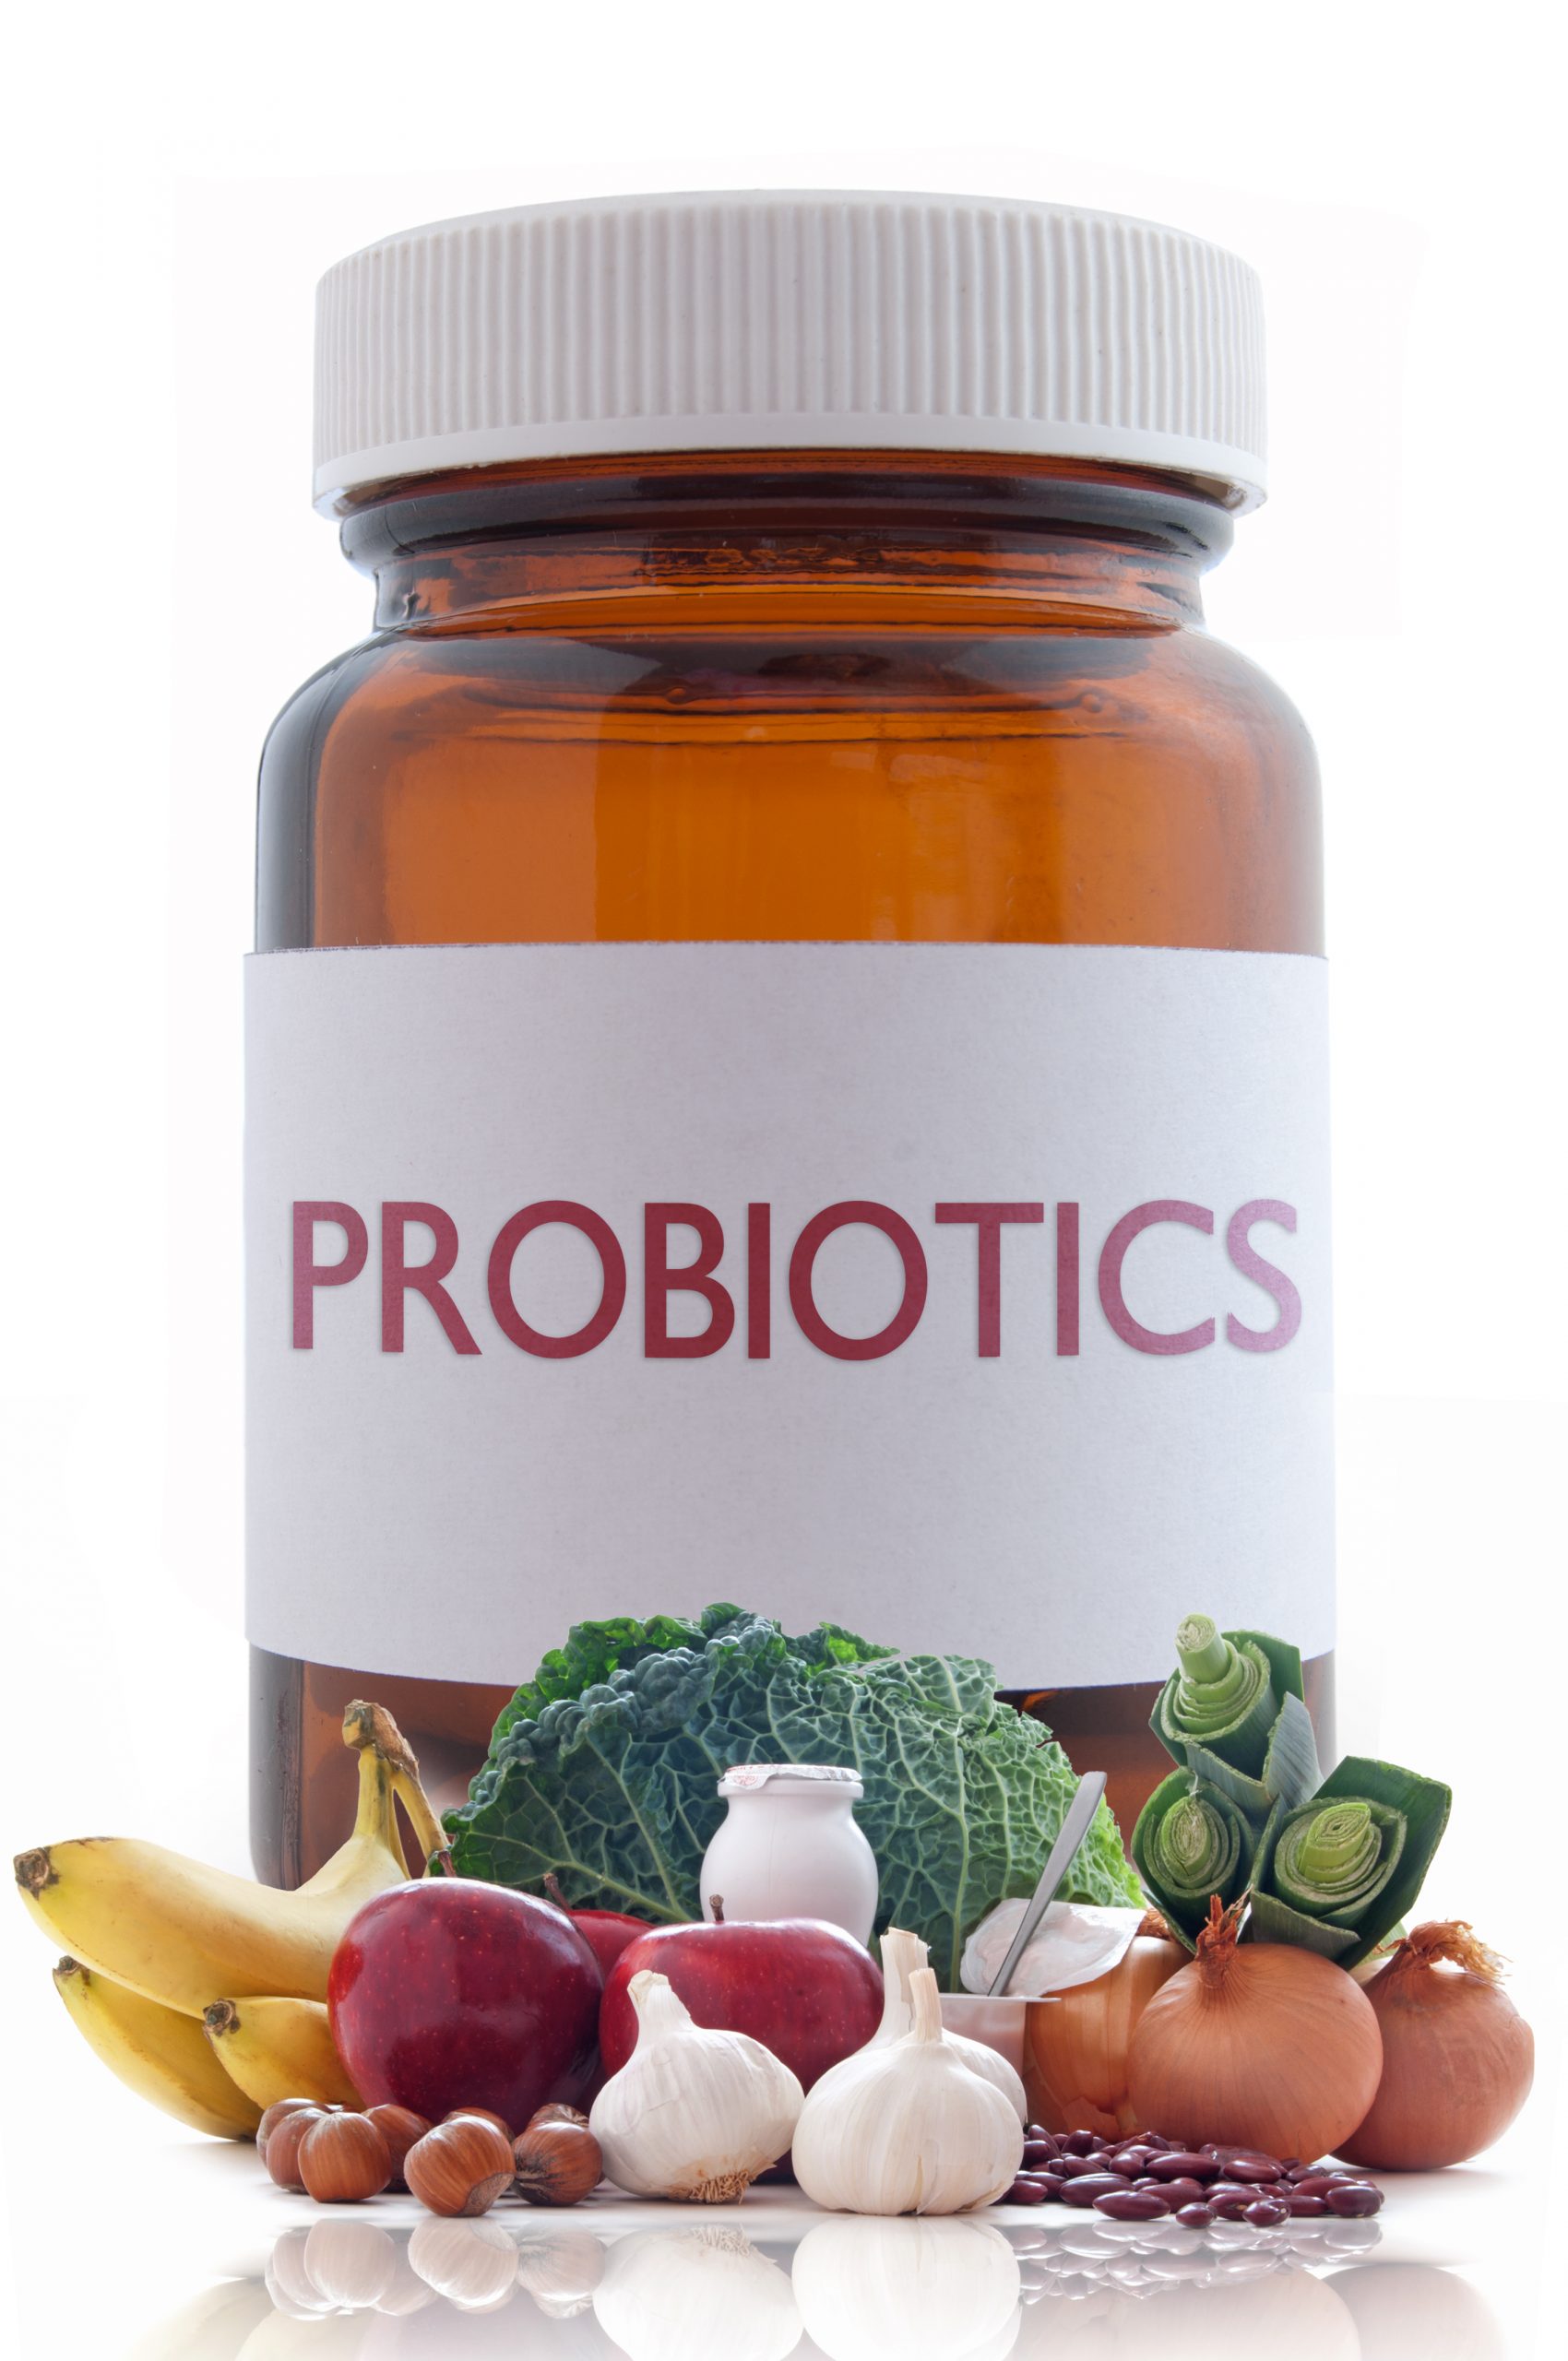 Probiotic pills concept